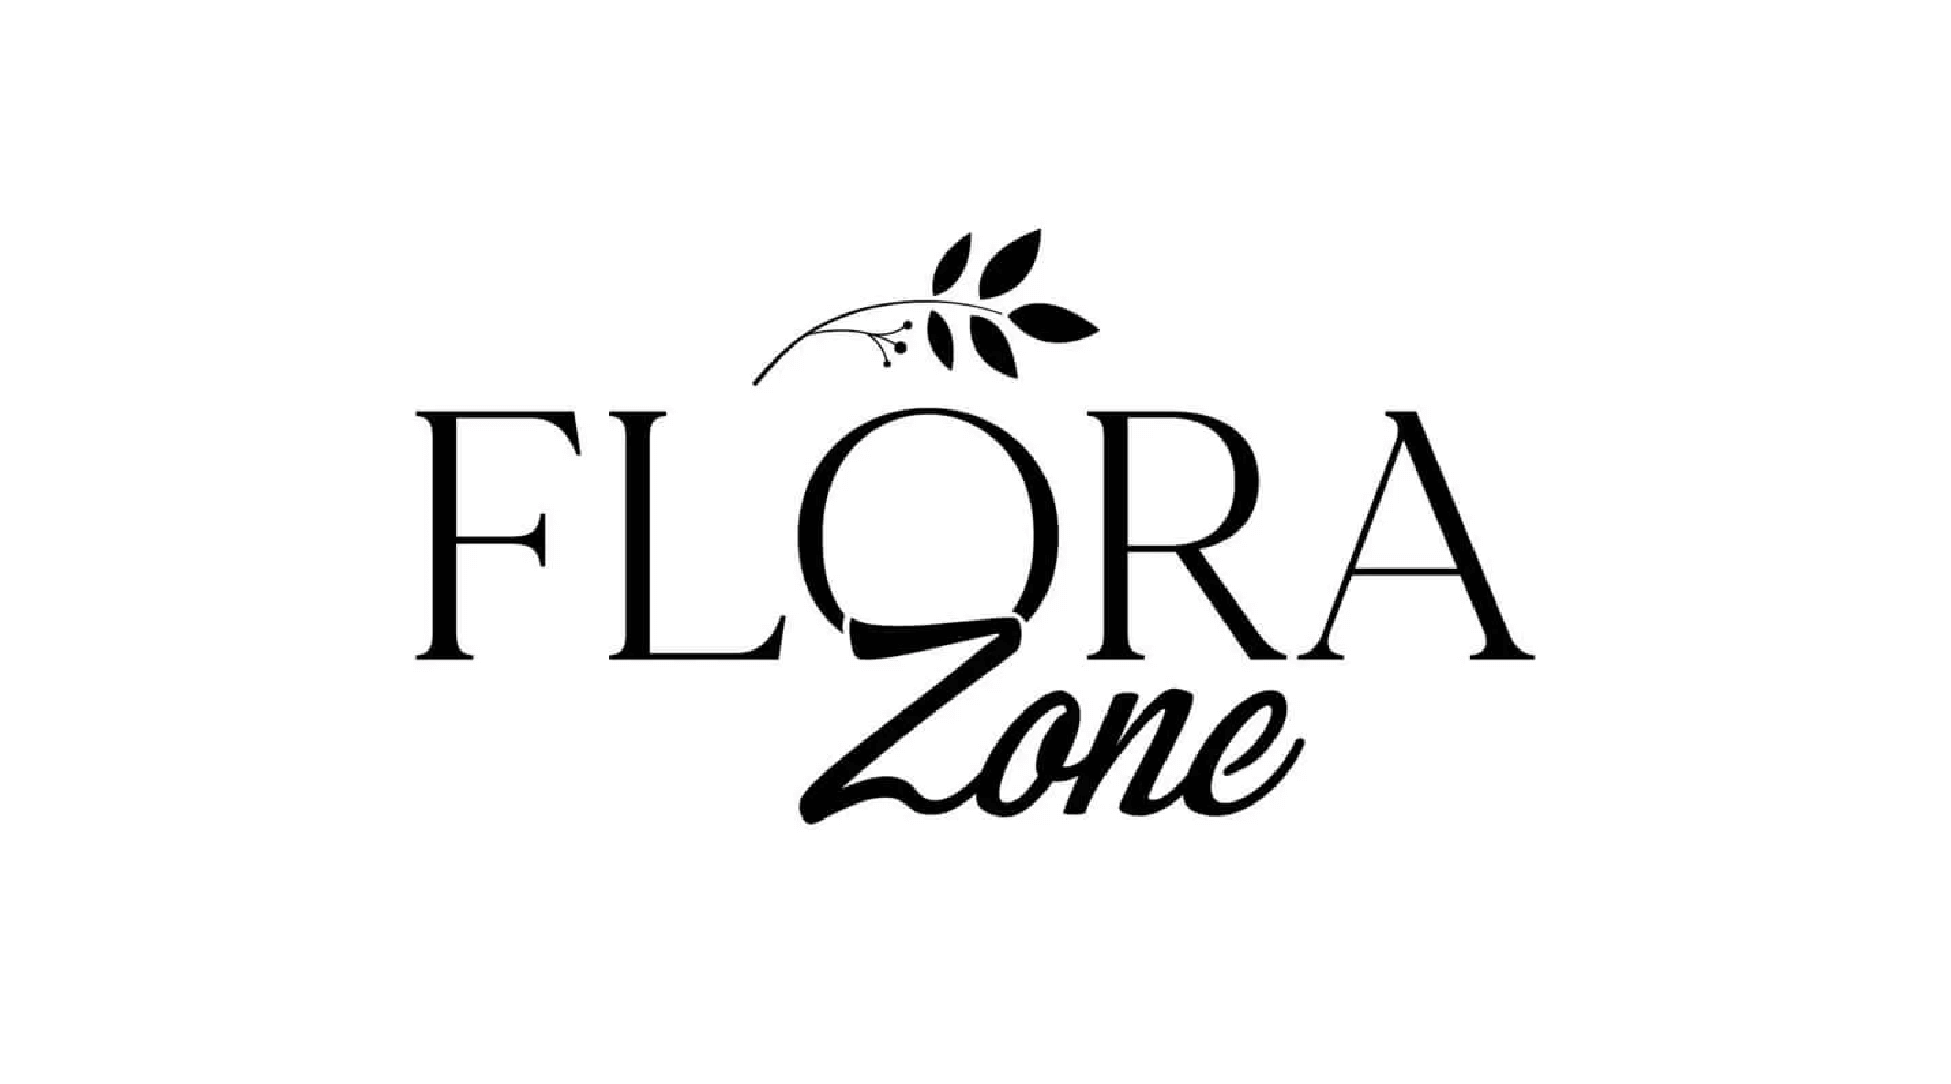 FLORA Zone